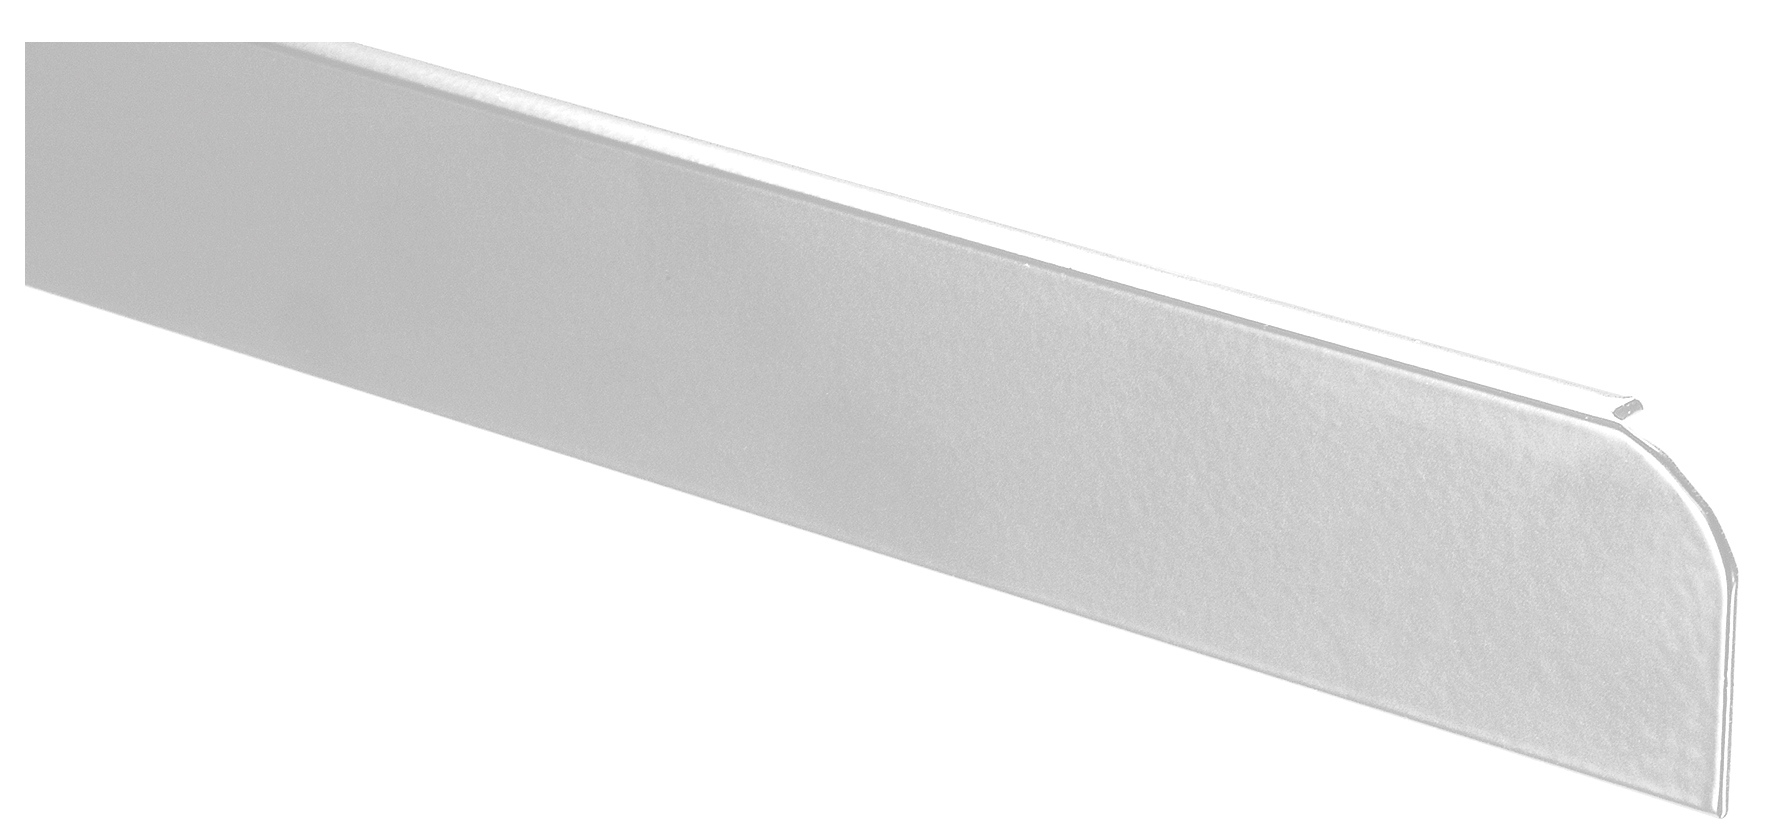 Profil alu blanc finition bordure rayon 6/8mm - 38mm - NORDLINGER